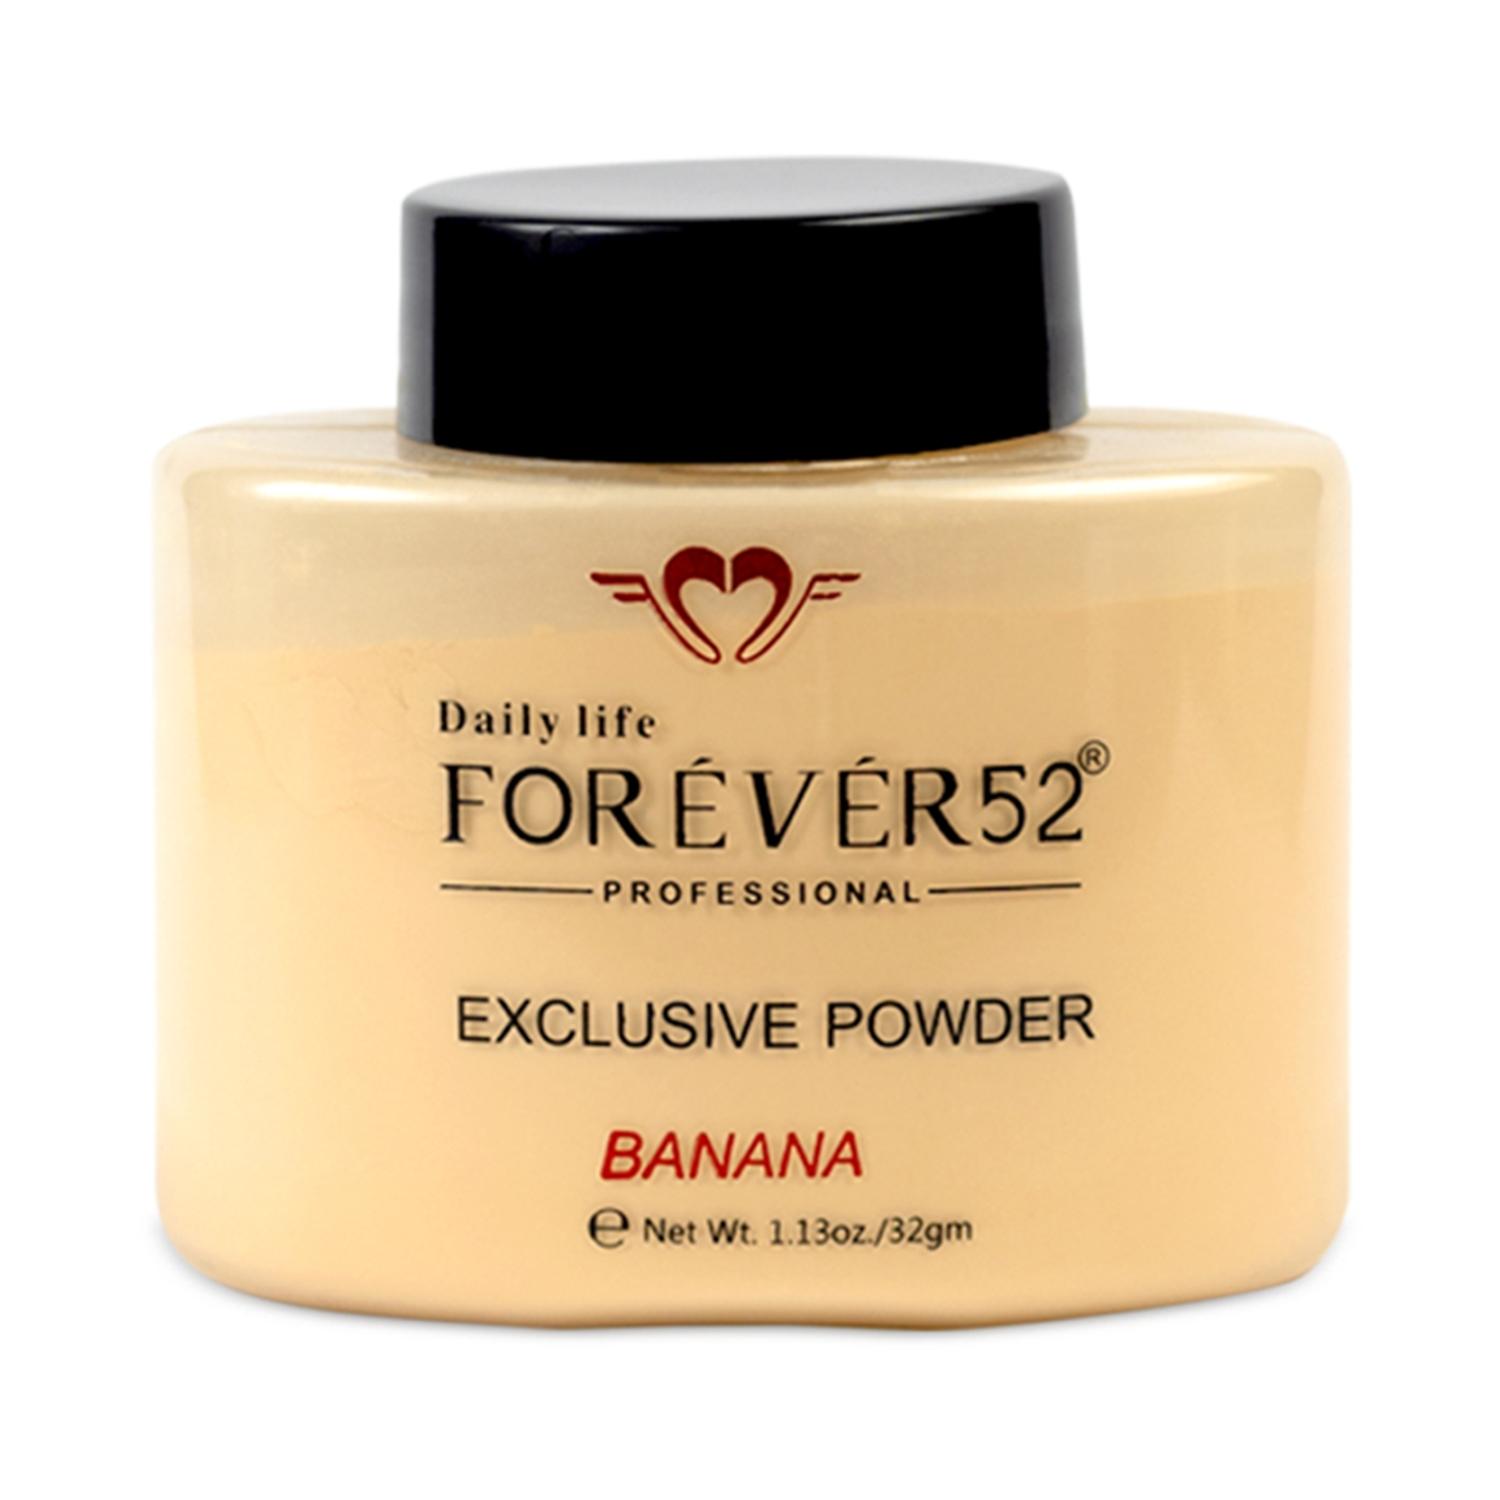 daily-life-forever52-banana-powder-fbe001-(32gm)